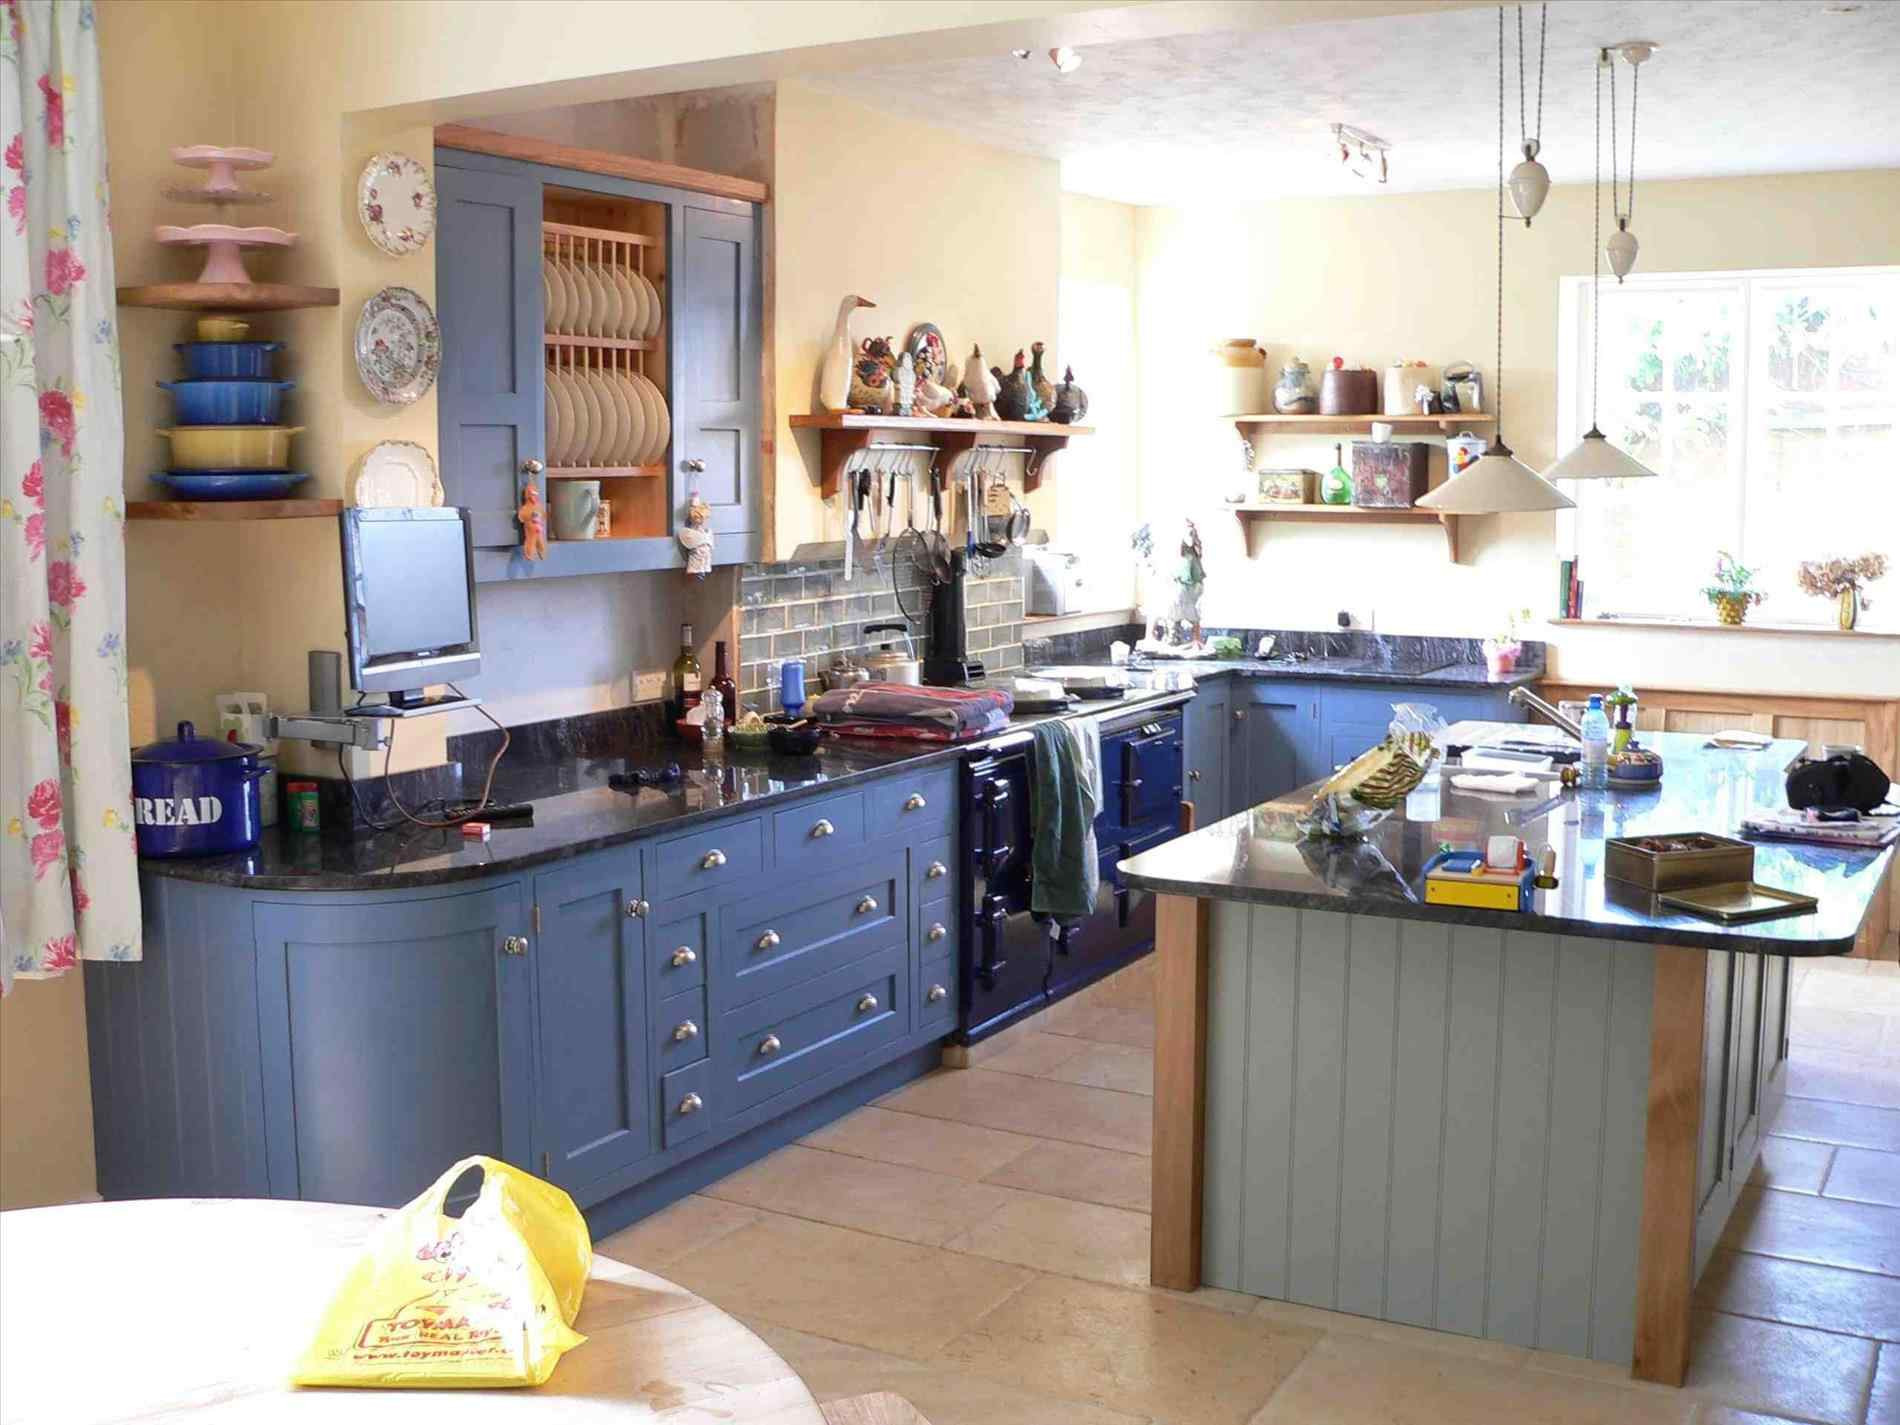 Best ideas about Cobalt Blue Kitchen Decor
. Save or Pin Cobalt Blue Kitchen Decor Now.